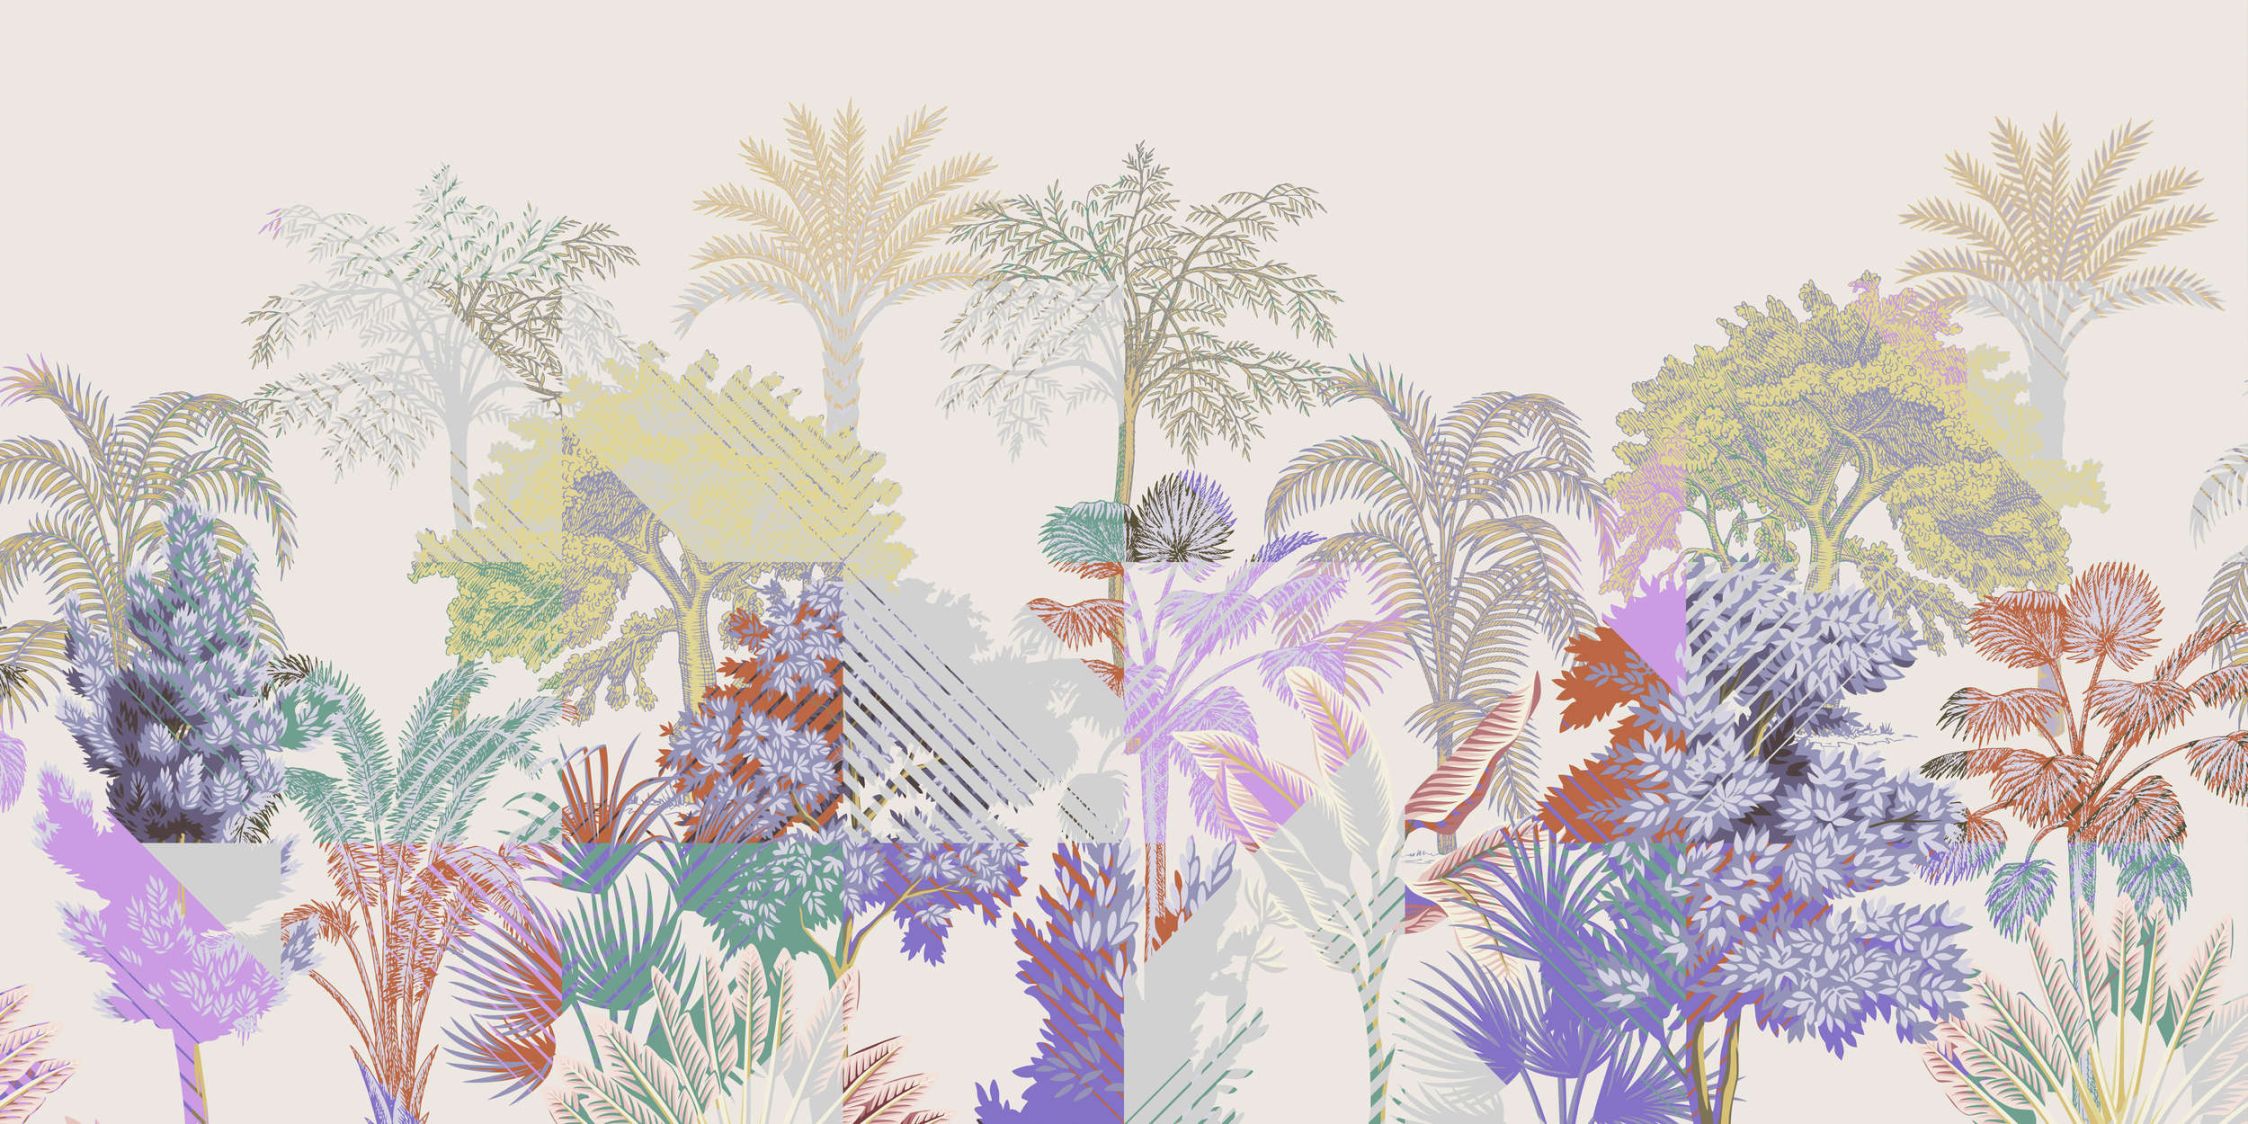             Photo wallpaper »esplanade 2« - jungle patchwork with bushes - colourful | matt, smooth non-woven
        